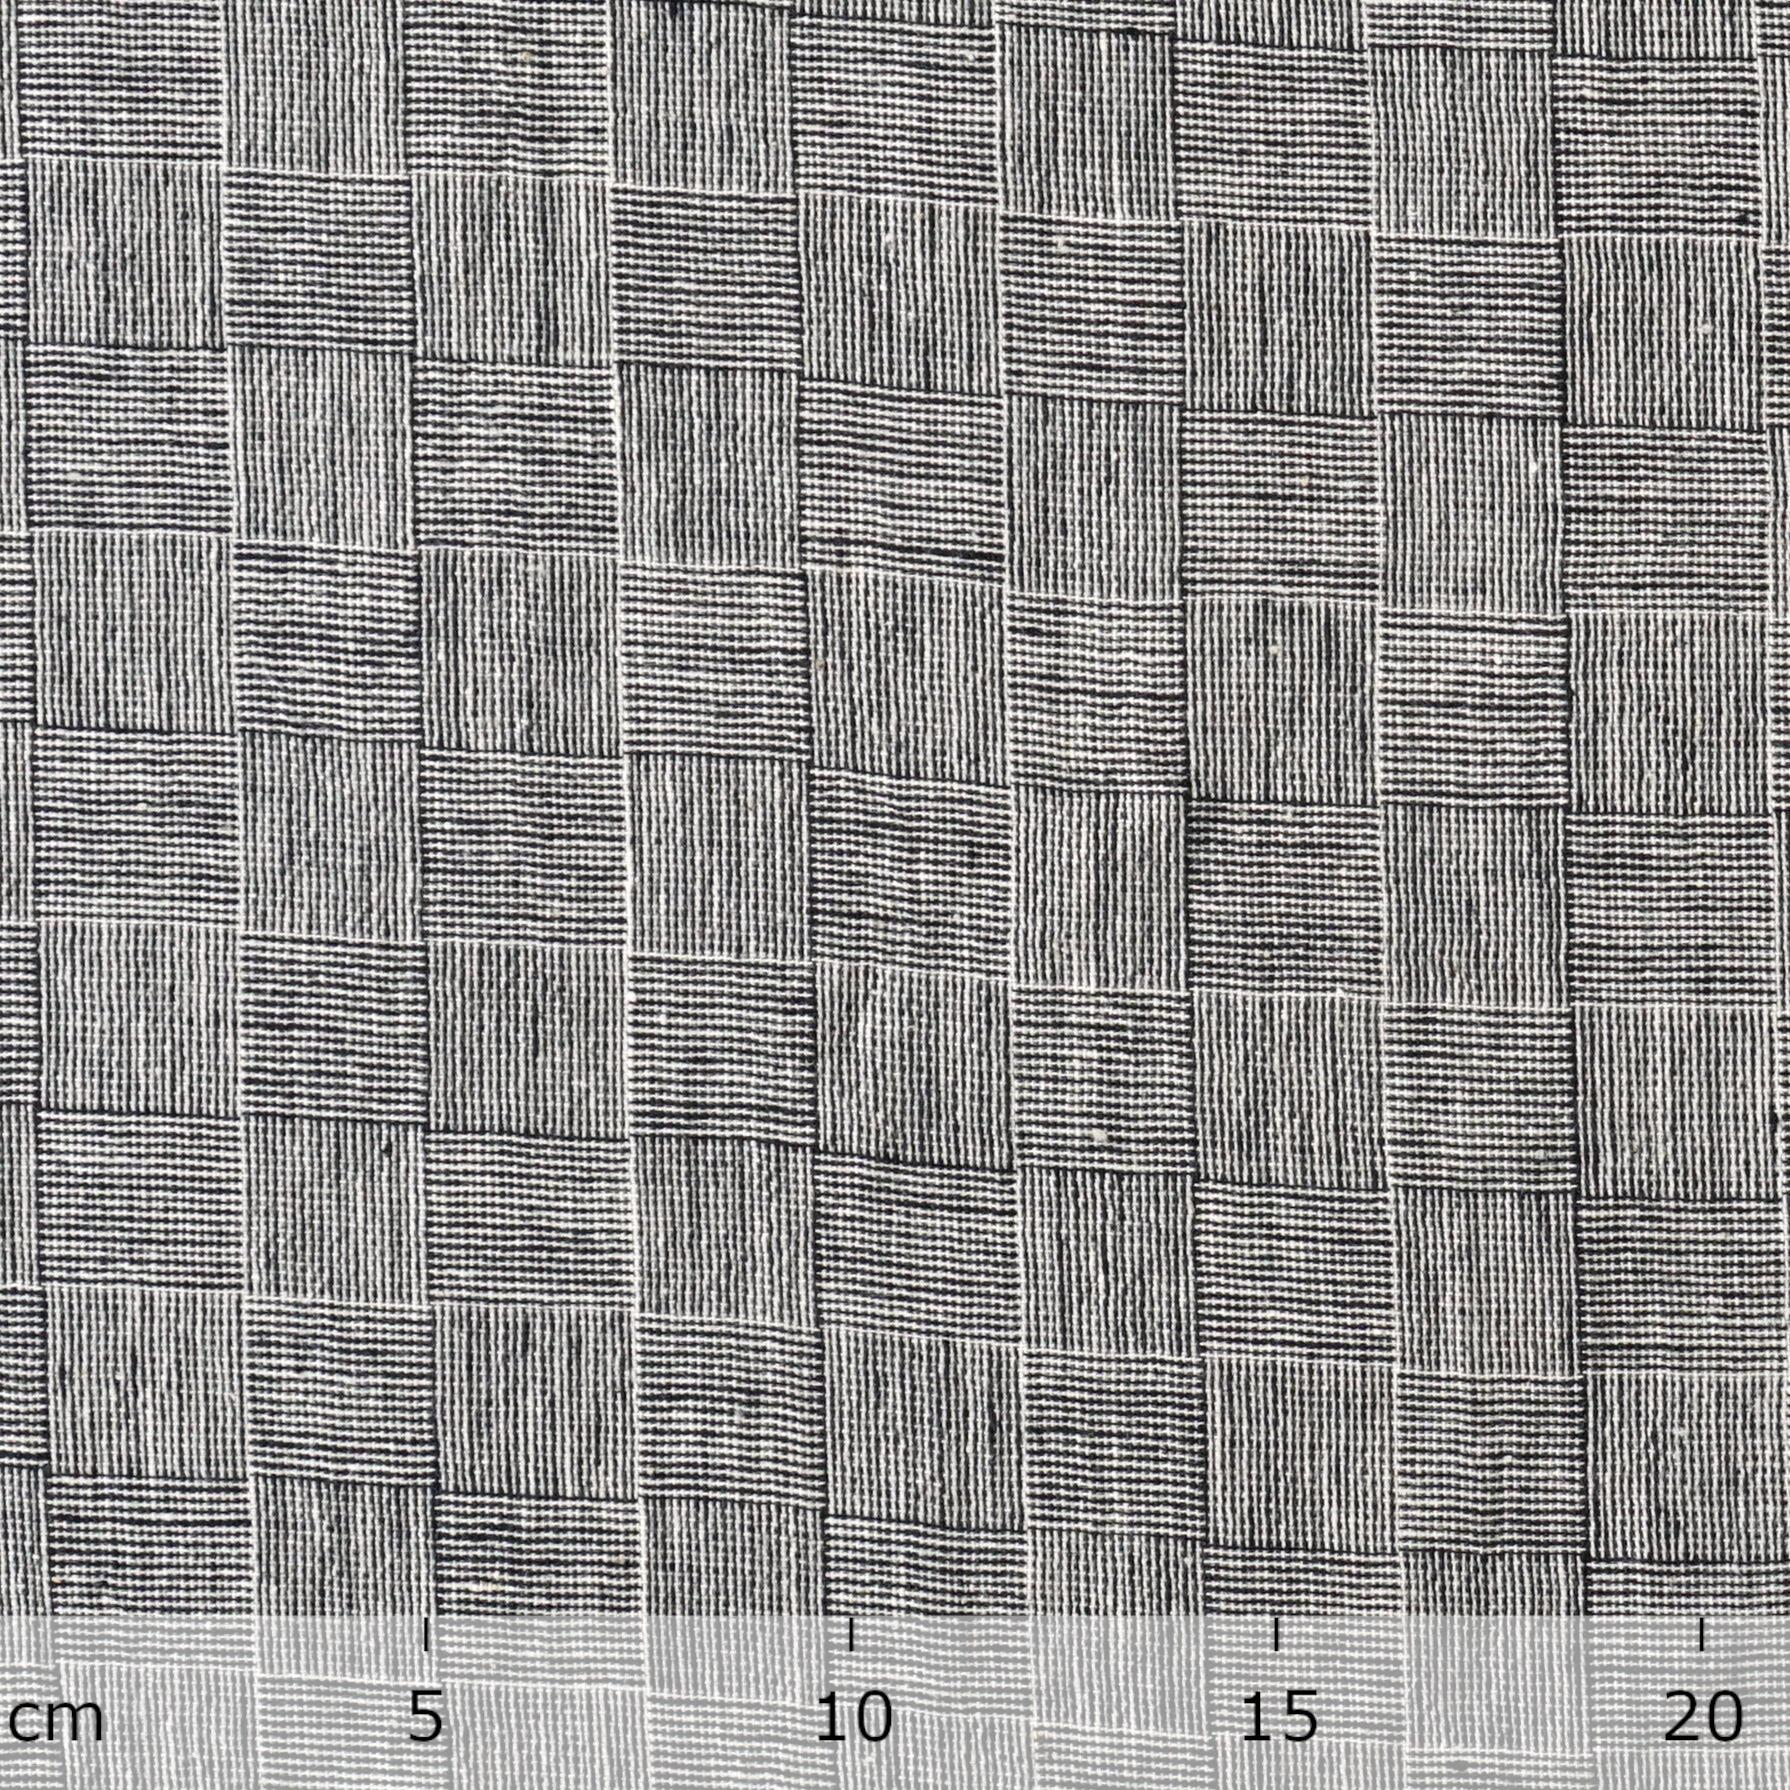 KJC12 - Indian Handloom-Woven Organic Kala Cotton Fabric - Plain 1 by 1 Weave - Checkers Design - Black Reactive Thread Dye - Ruler